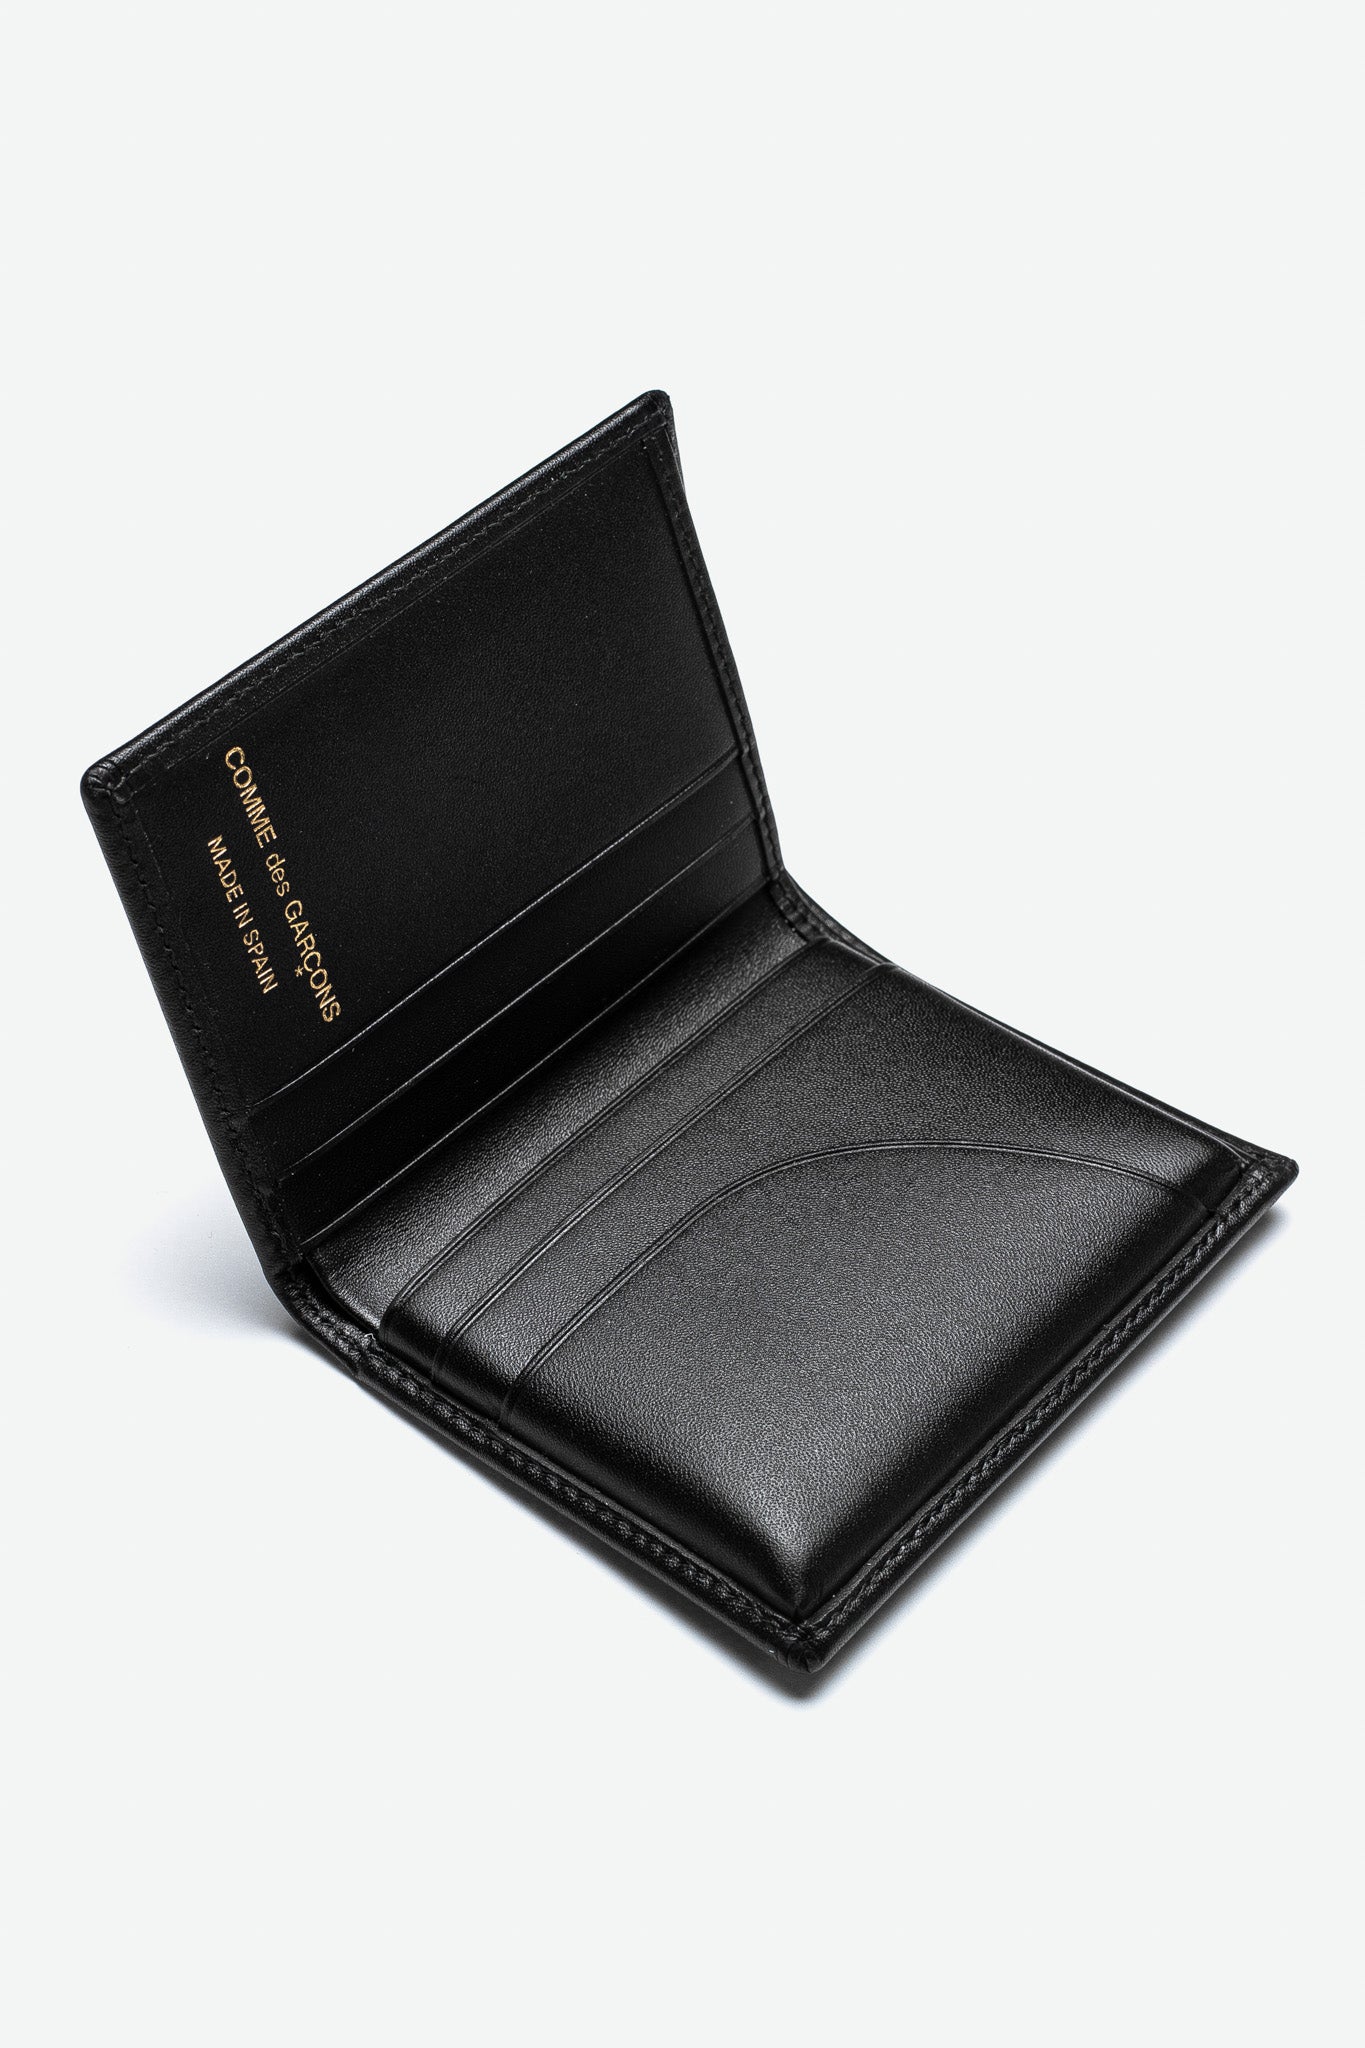 Comme Des Garçons Wallet Black Brick Large Leather Wallet